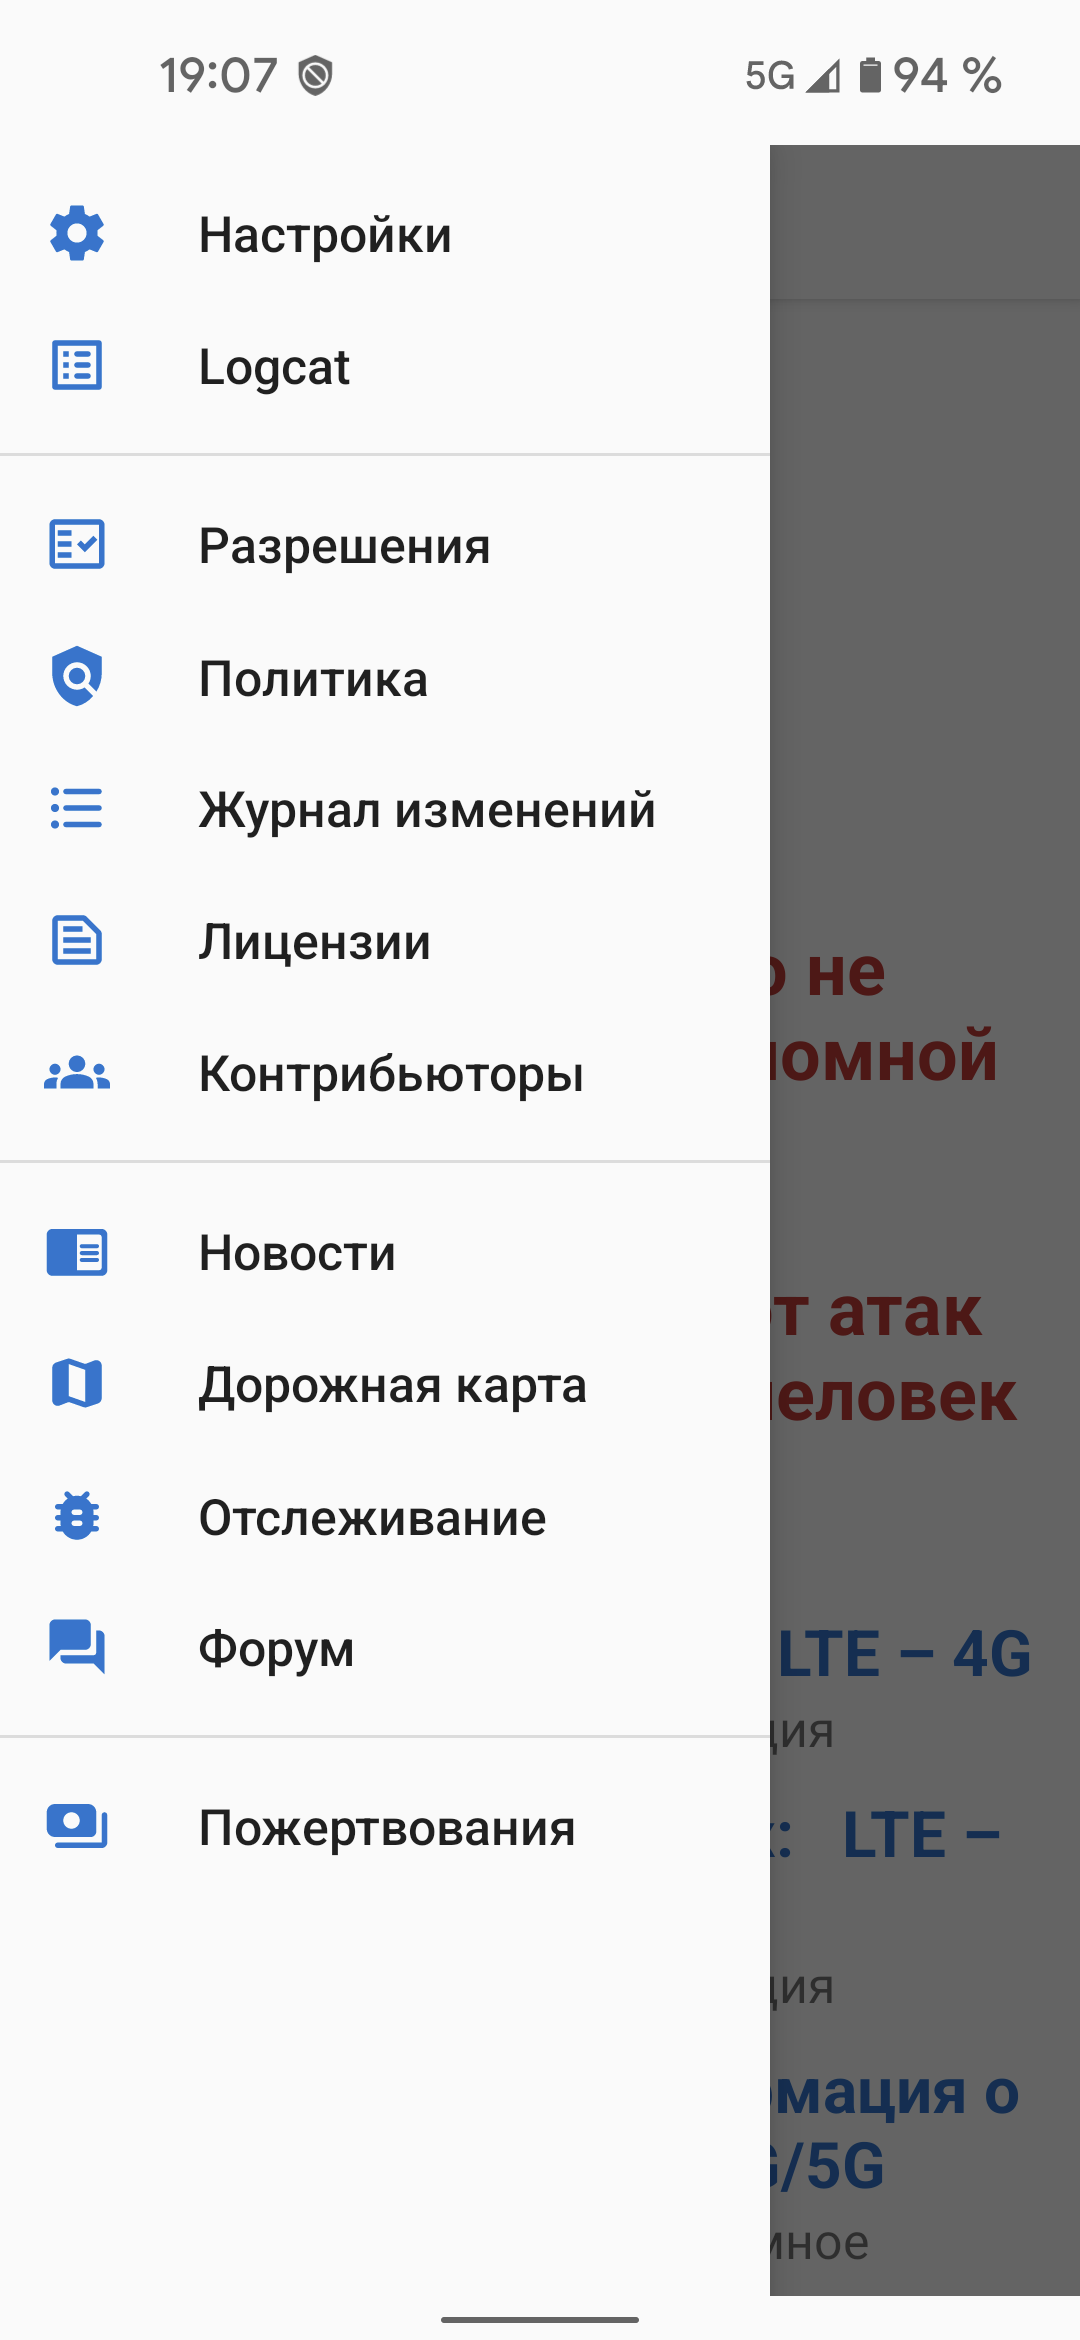 fastlane/metadata/android/ru-RU/images/phoneScreenshots/04-NavigationMenu-ru.png